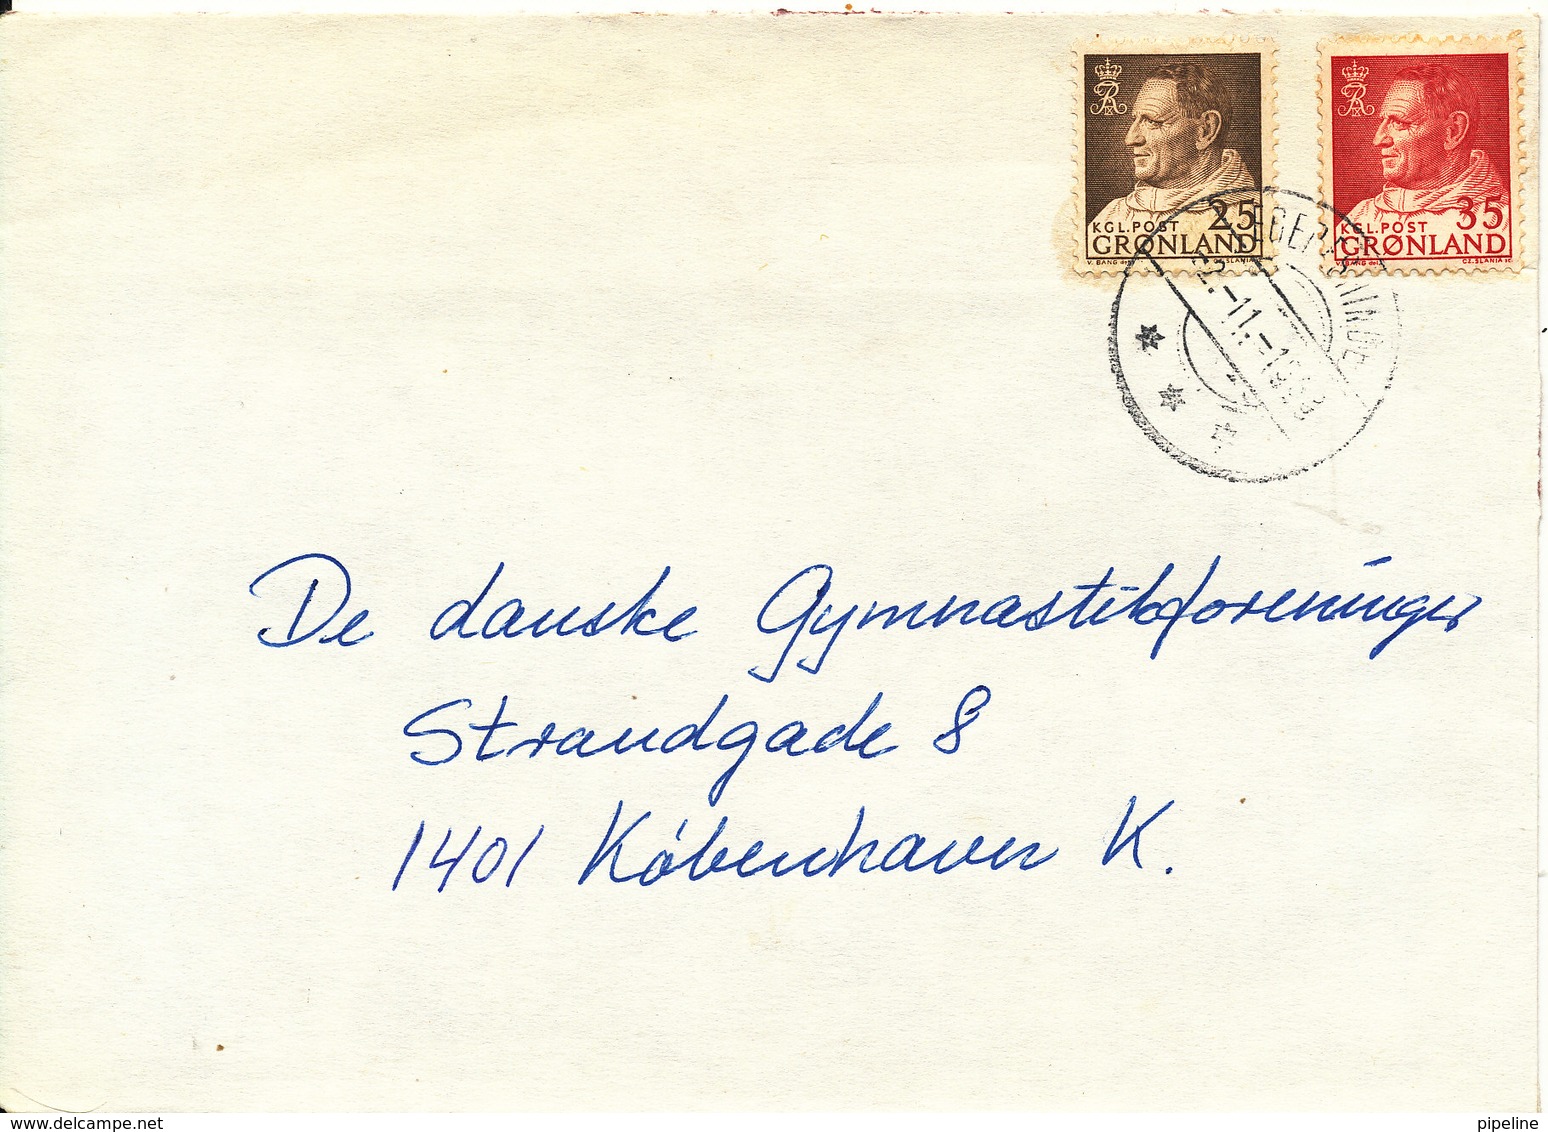 Greenland Cover Sent To Denmark Egedesminde 2-11-1968 - Lettres & Documents